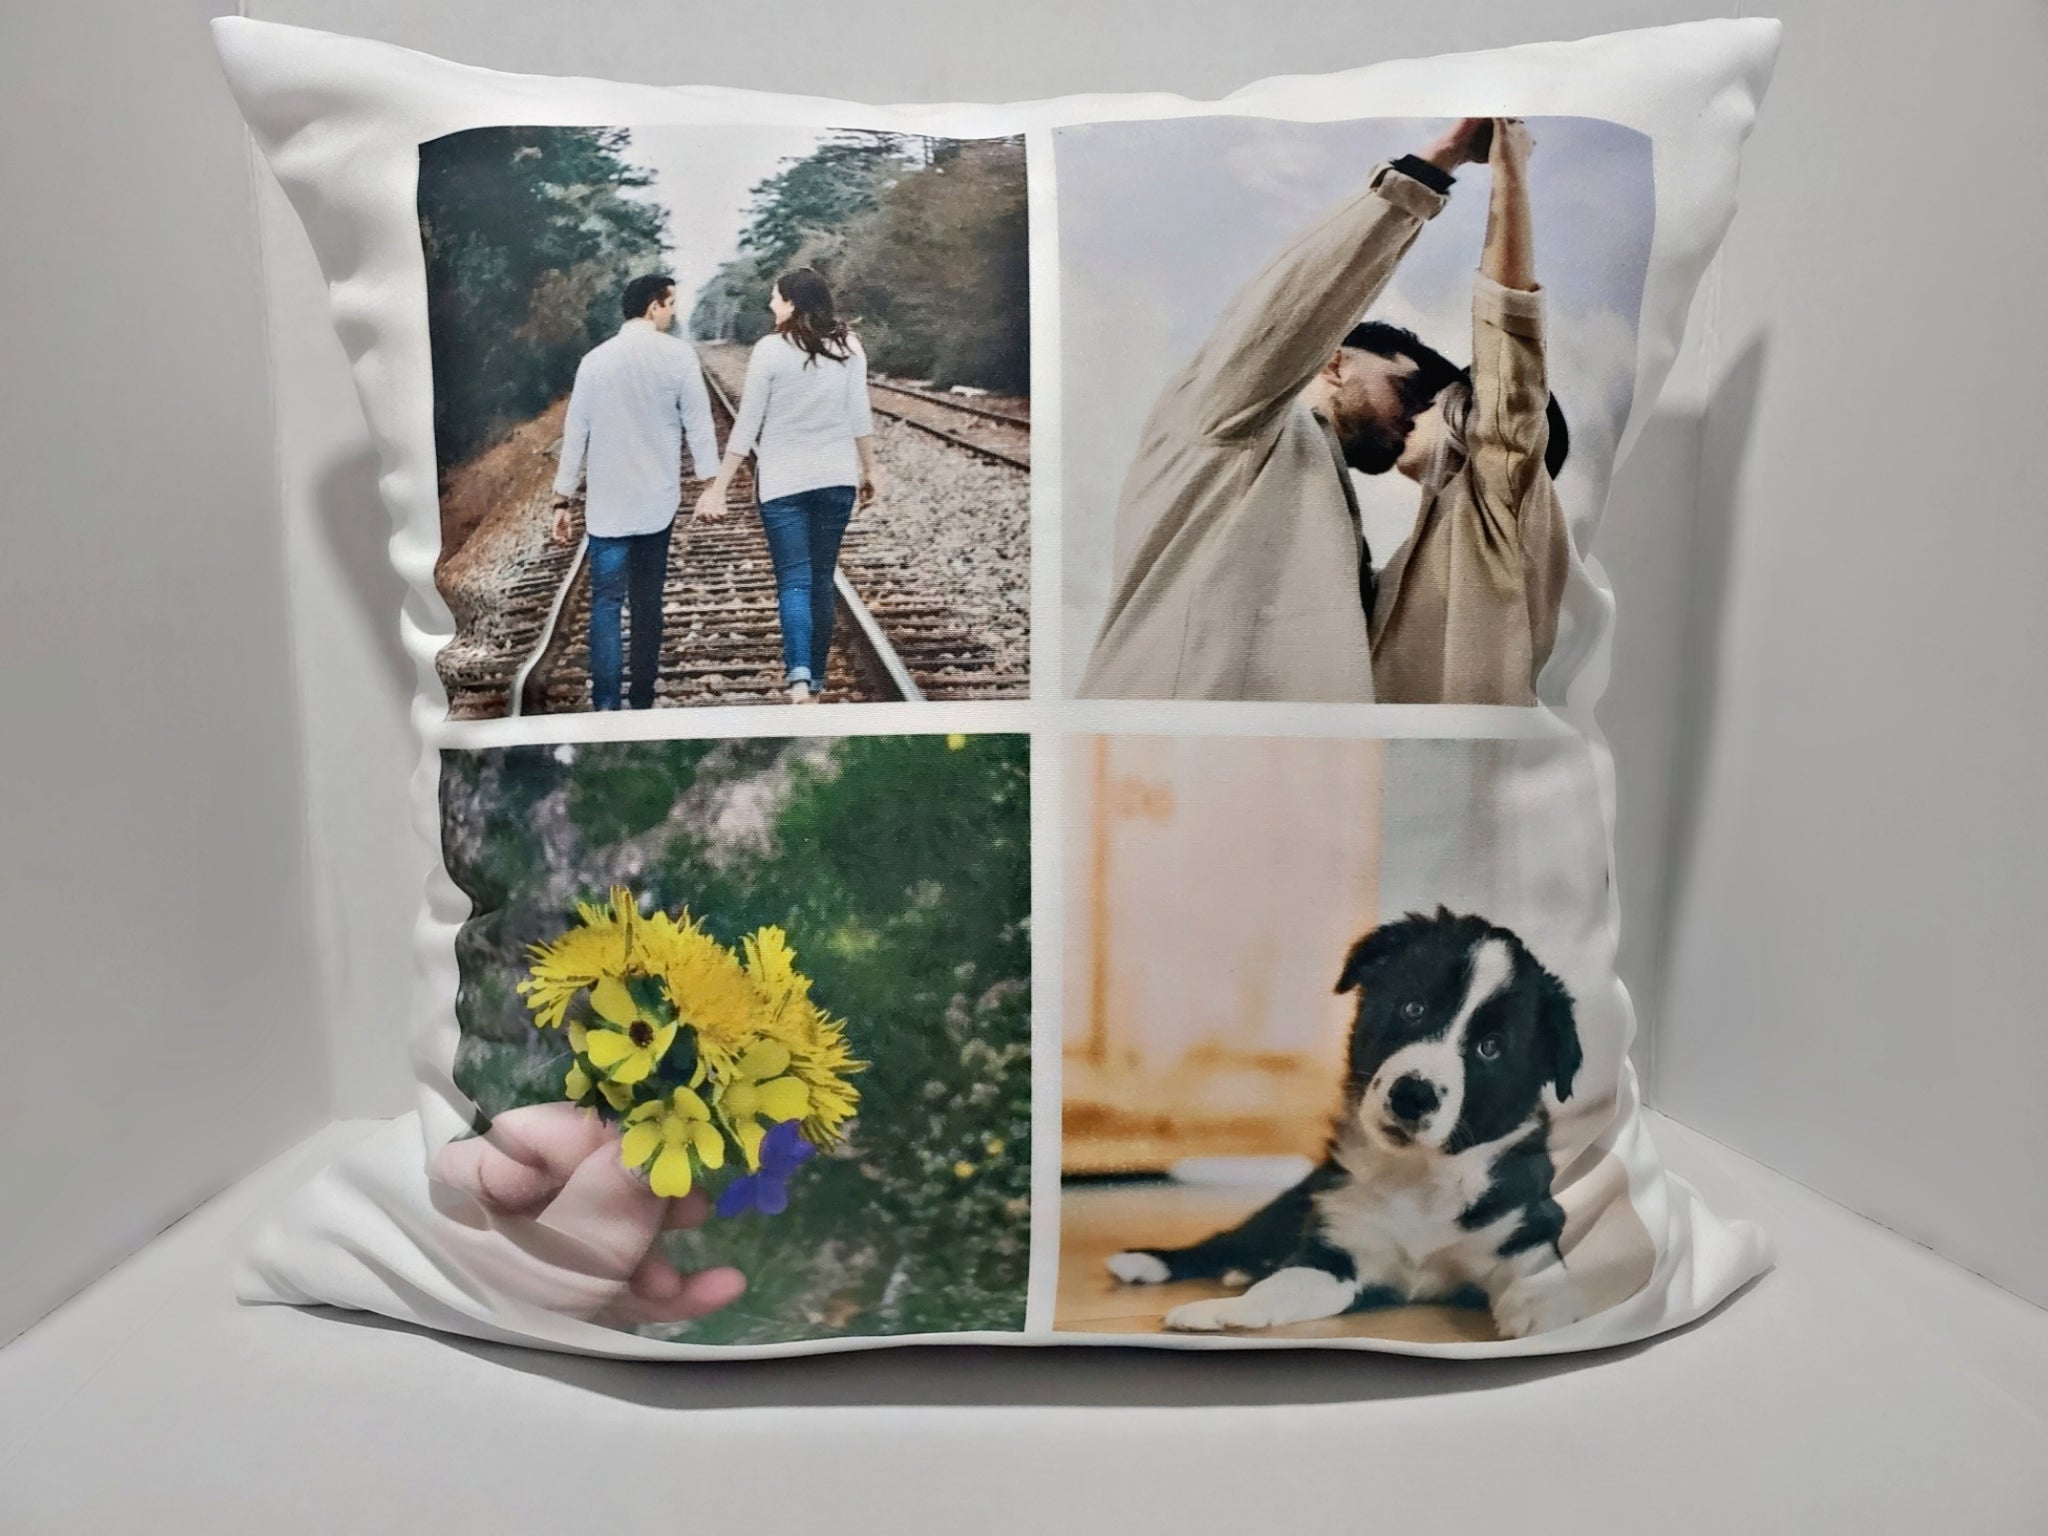 Personalize 18x18 Photo Throw Pillows, Custom Decor